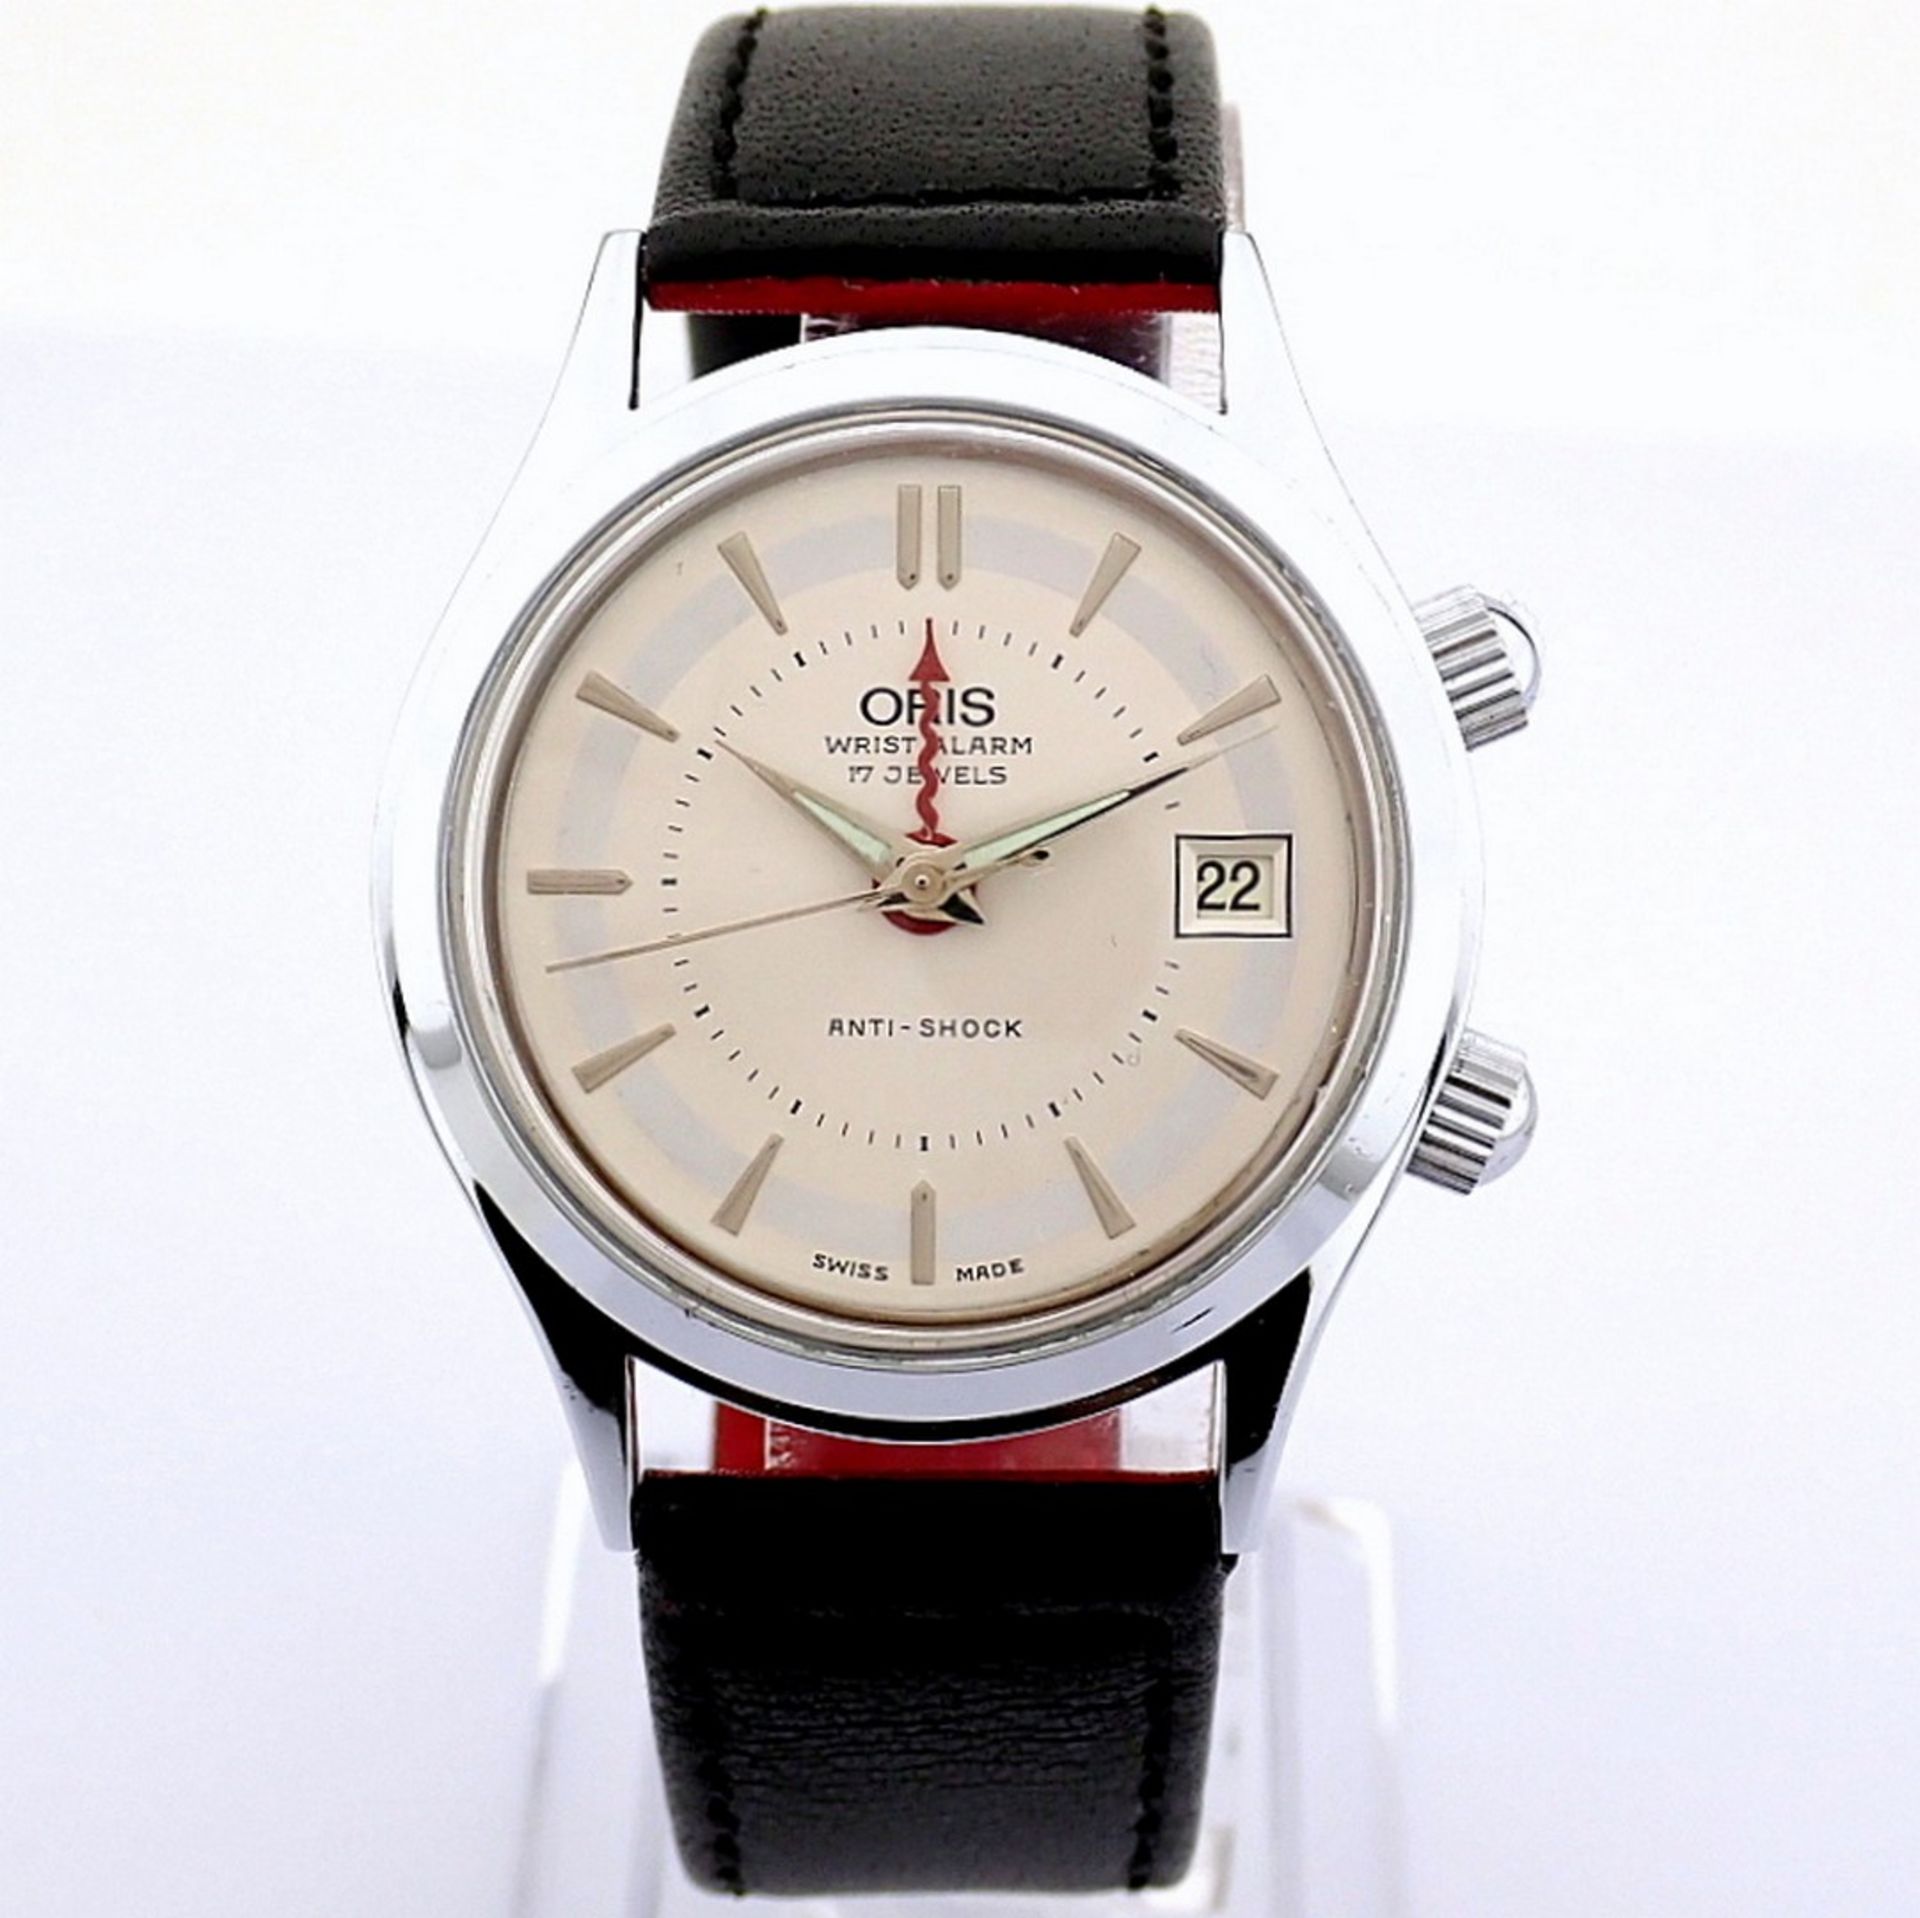 Oris / Wirstalarm 17 Jewels Anti-Shock - Gentlemen's Steel Wristwatch - Image 10 of 10